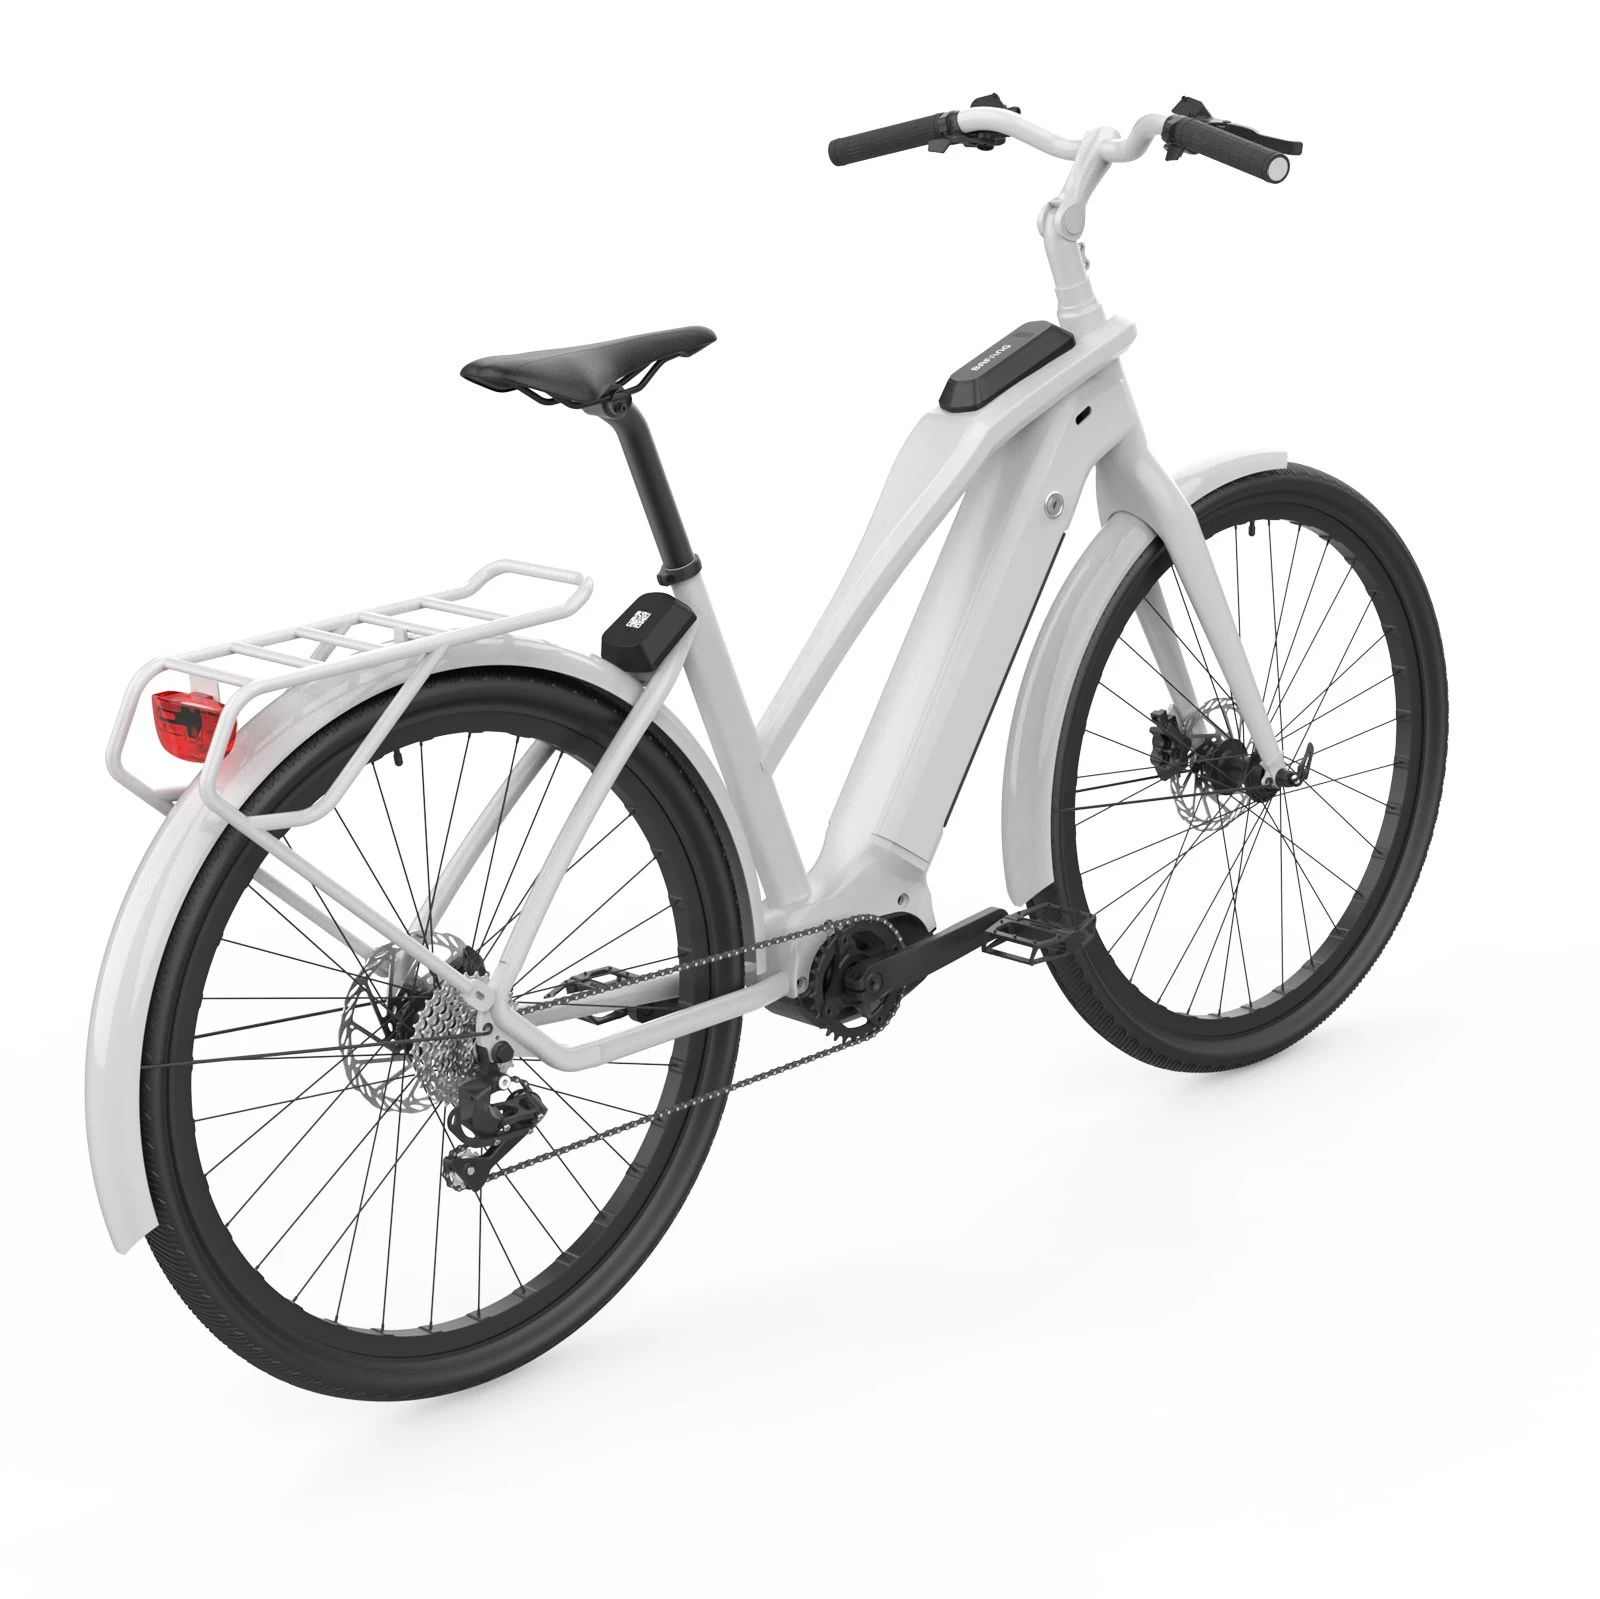 Dispositivo M136 IoT para sistema de bicicletas compartidas Alquiler de bicicletas E-bikes QR Desbloqueo y bloqueo con sistema de seguimiento GPS